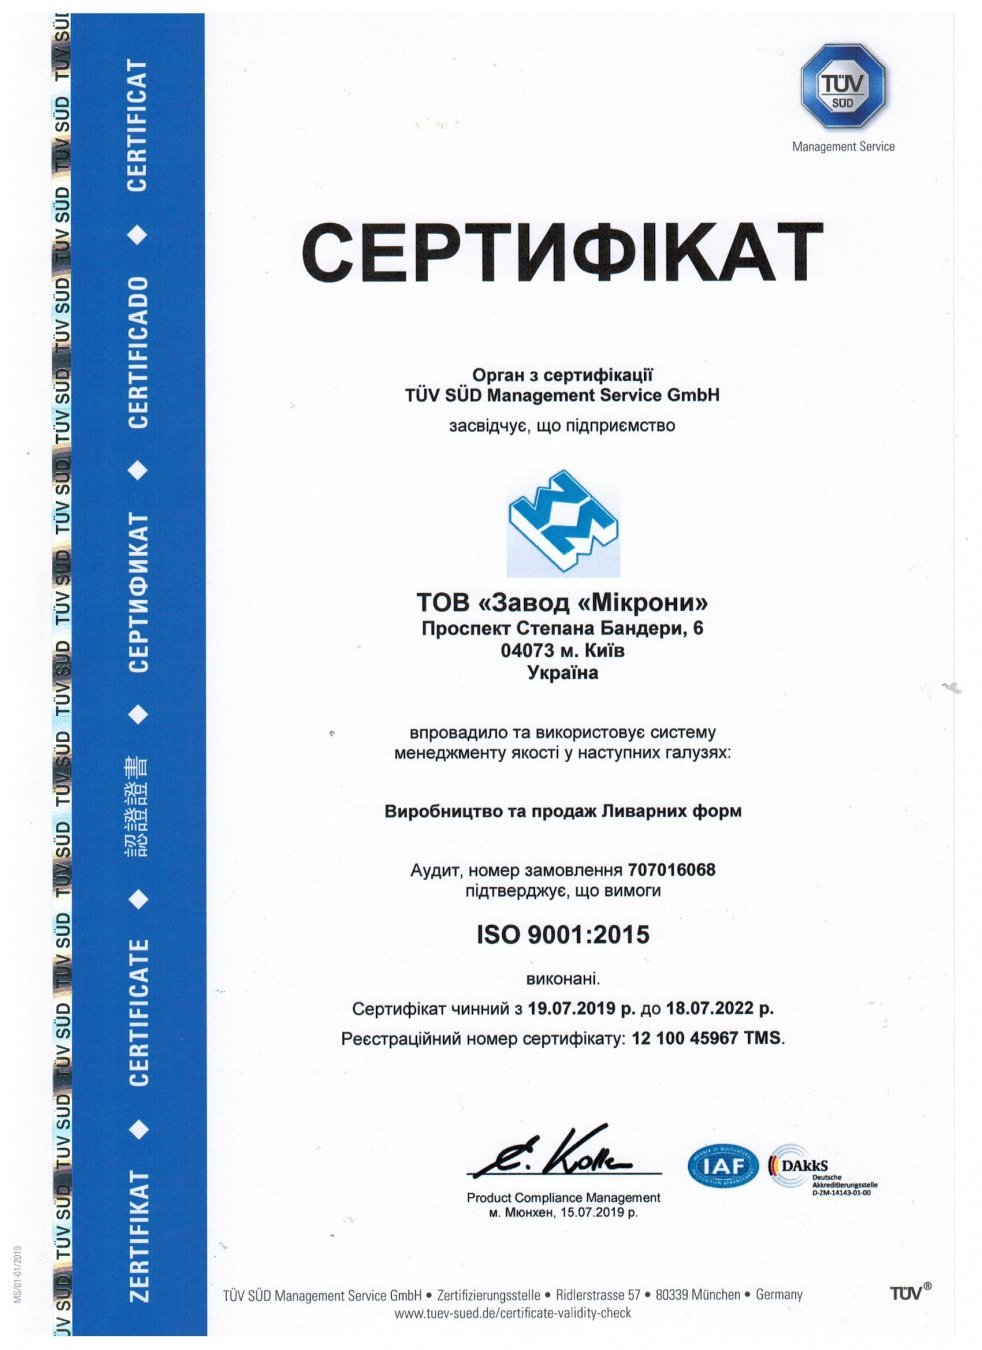 Certificate_ukr_1.jpeg